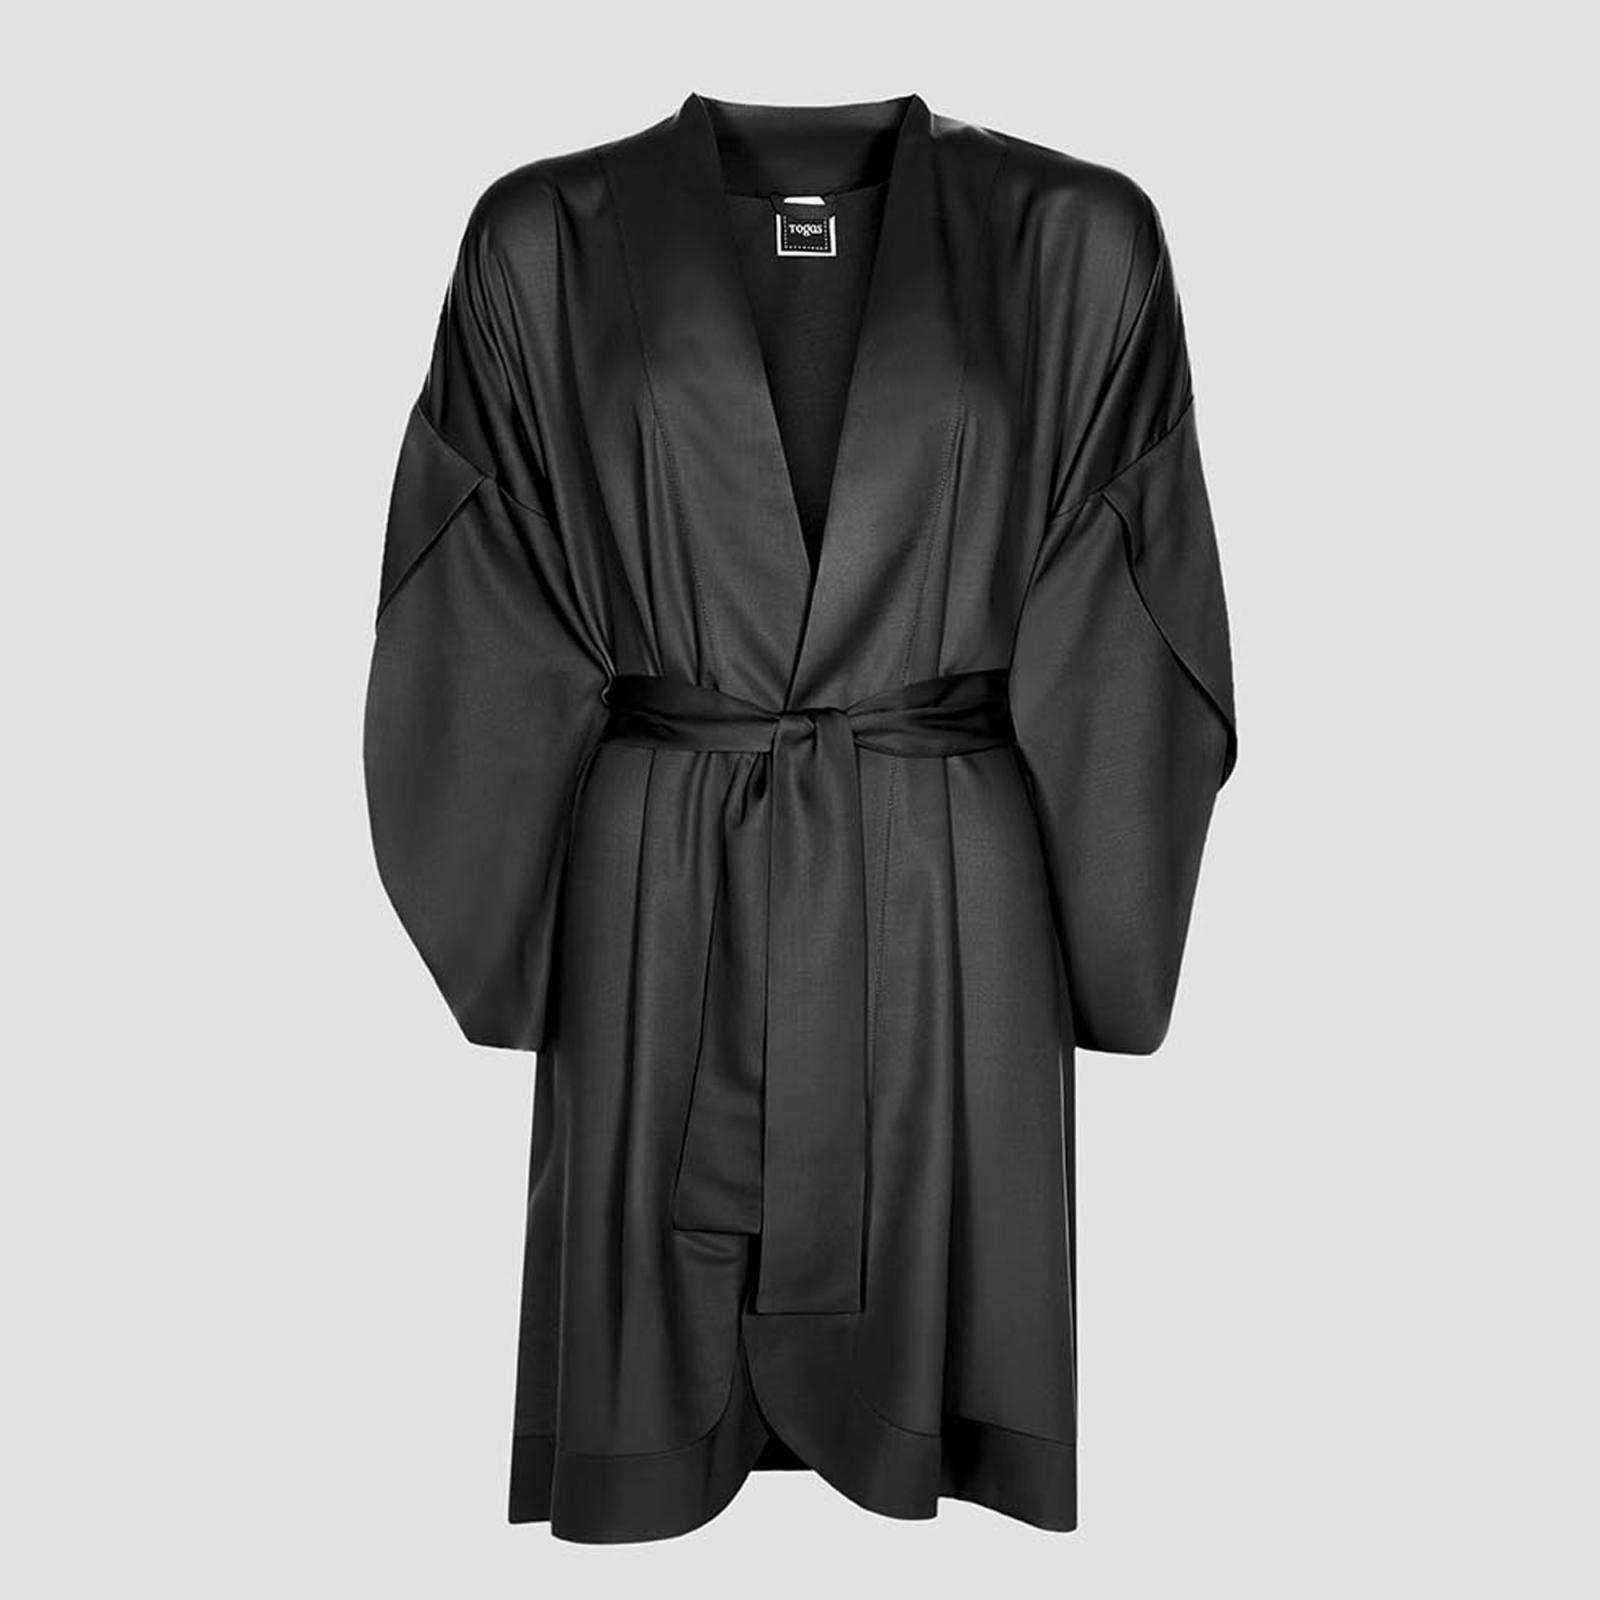 Халат-кимоно короткое Togas Наоми чёрное М (46) халат кимоно togas наоми розовый xxl 52